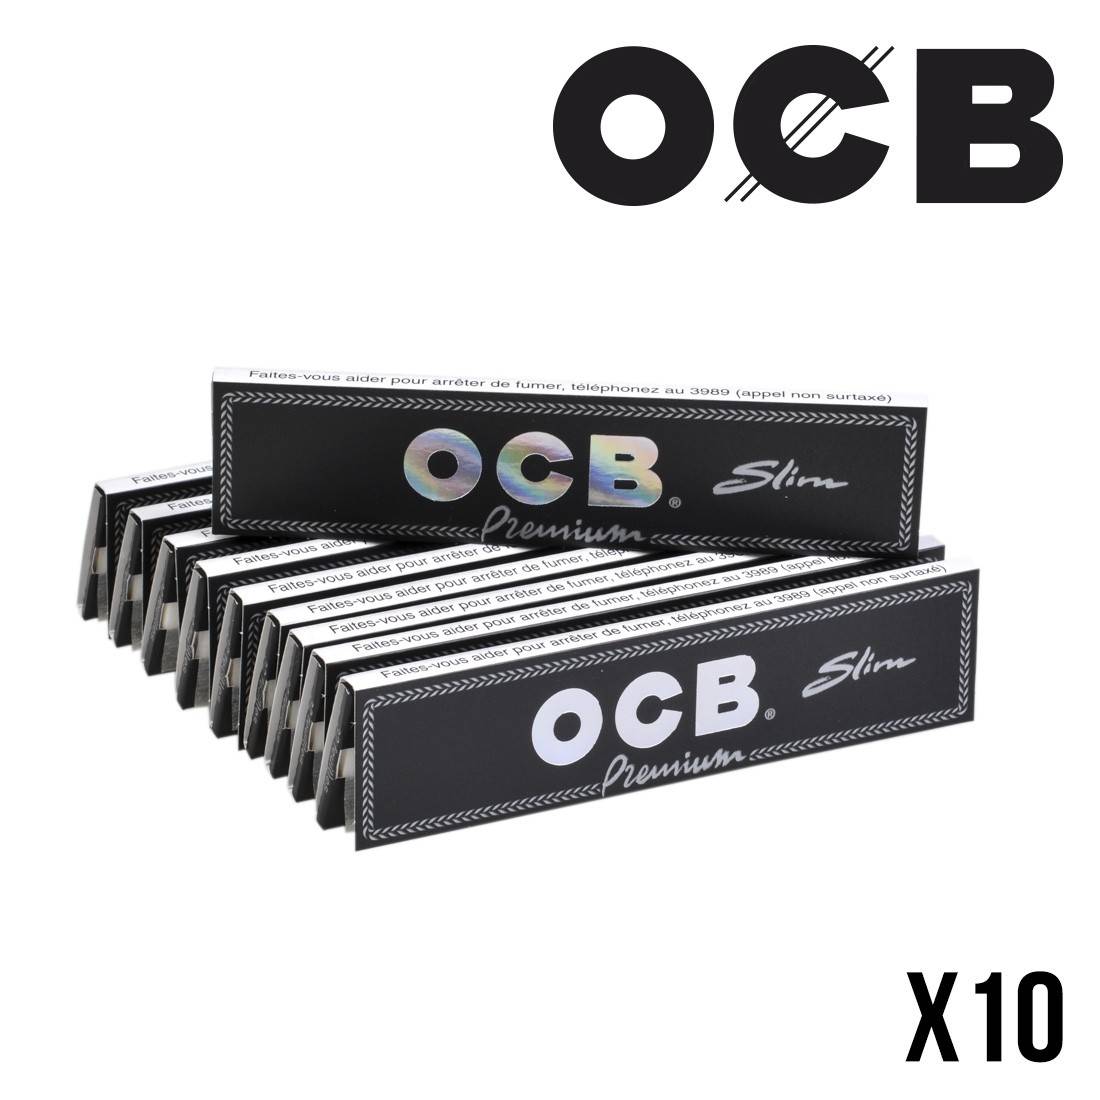 OCB Slim Premium noir lot de 10 carnets de 32 feuilles 1 briquet cadeau 